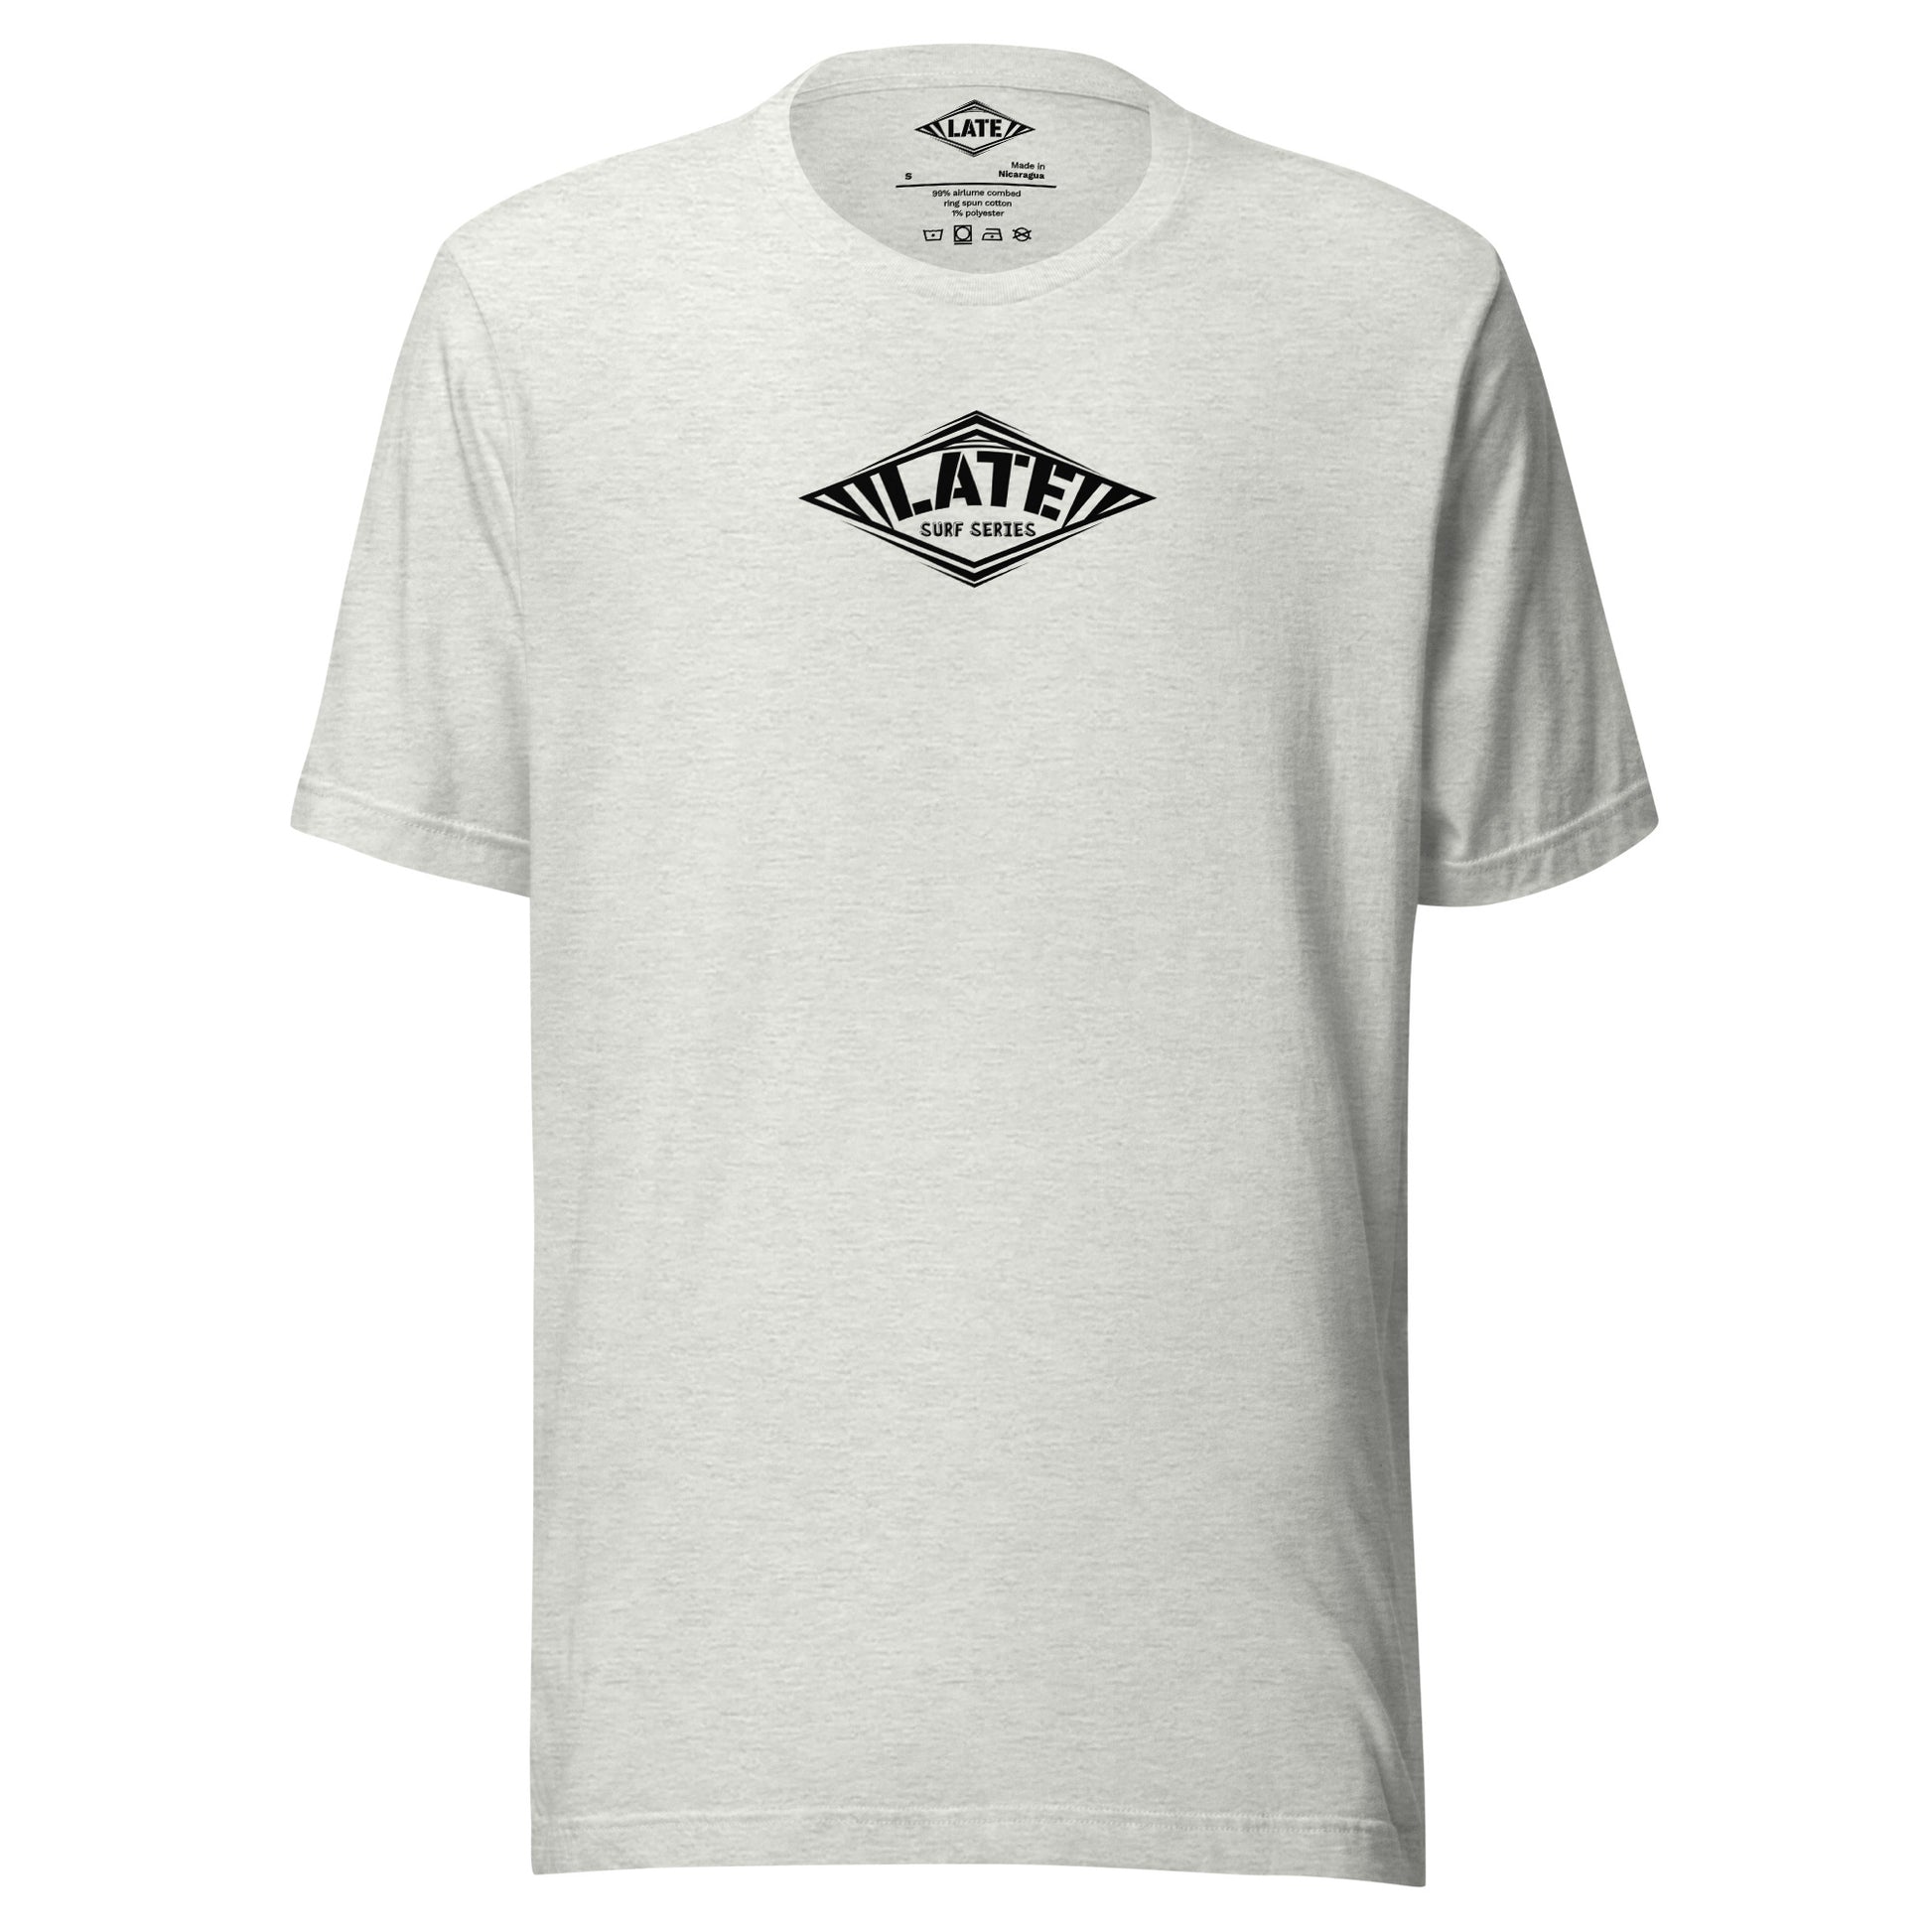 T-Shirt Take On The Elements style hurley texte surf series, et logo Late tshirt de face couleur gris